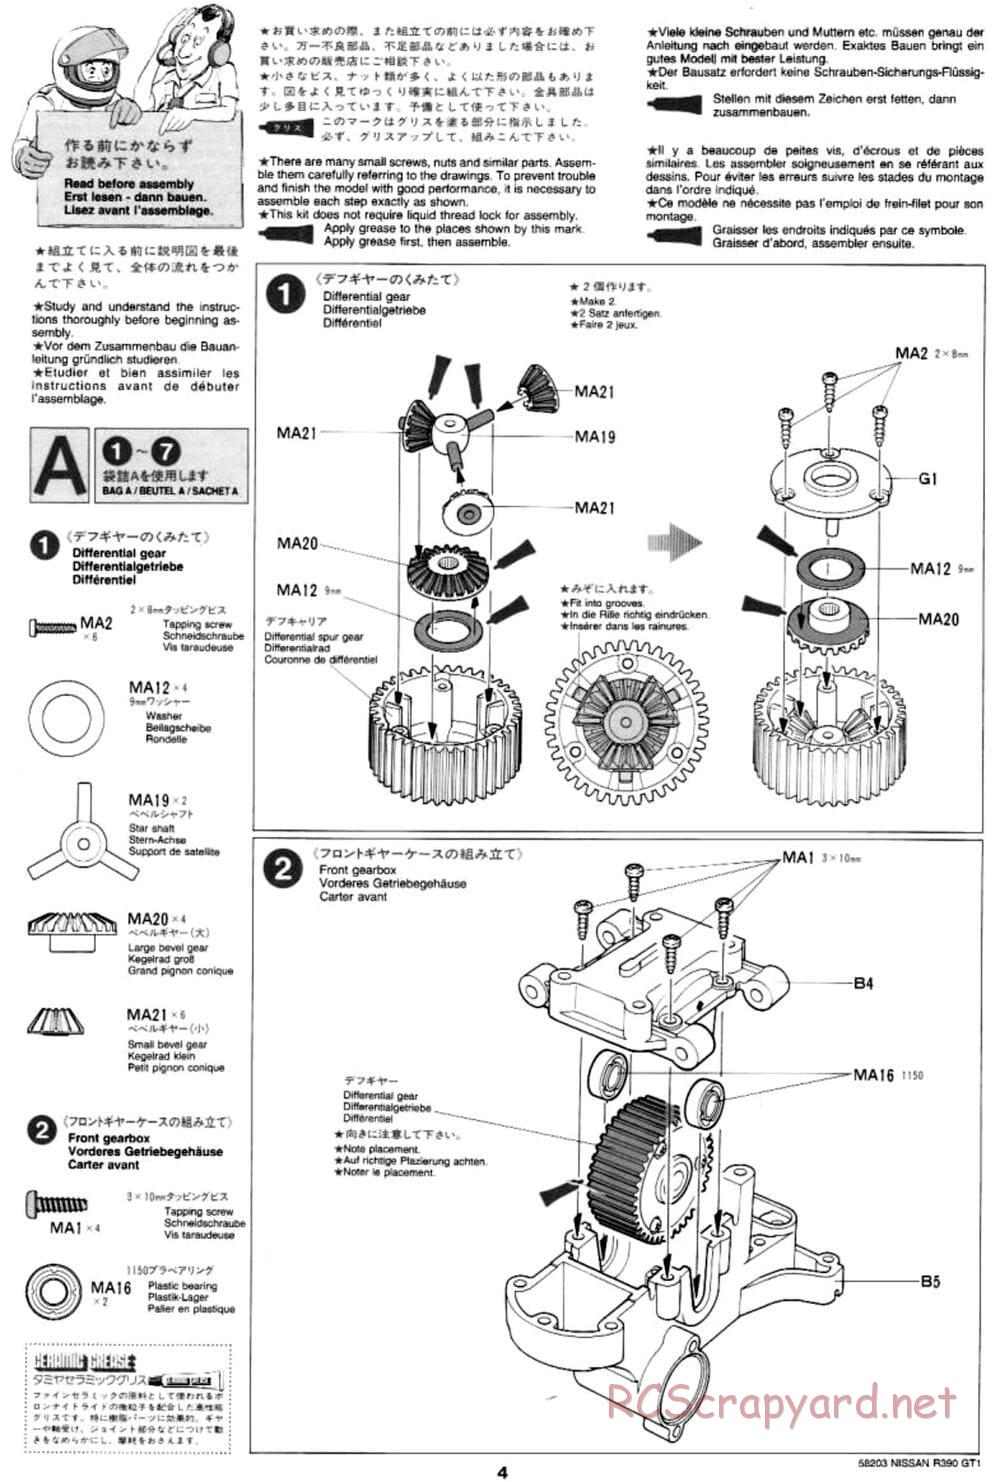 Tamiya - Nissan R390 GT1 - TA-03R Chassis - Manual - Page 4